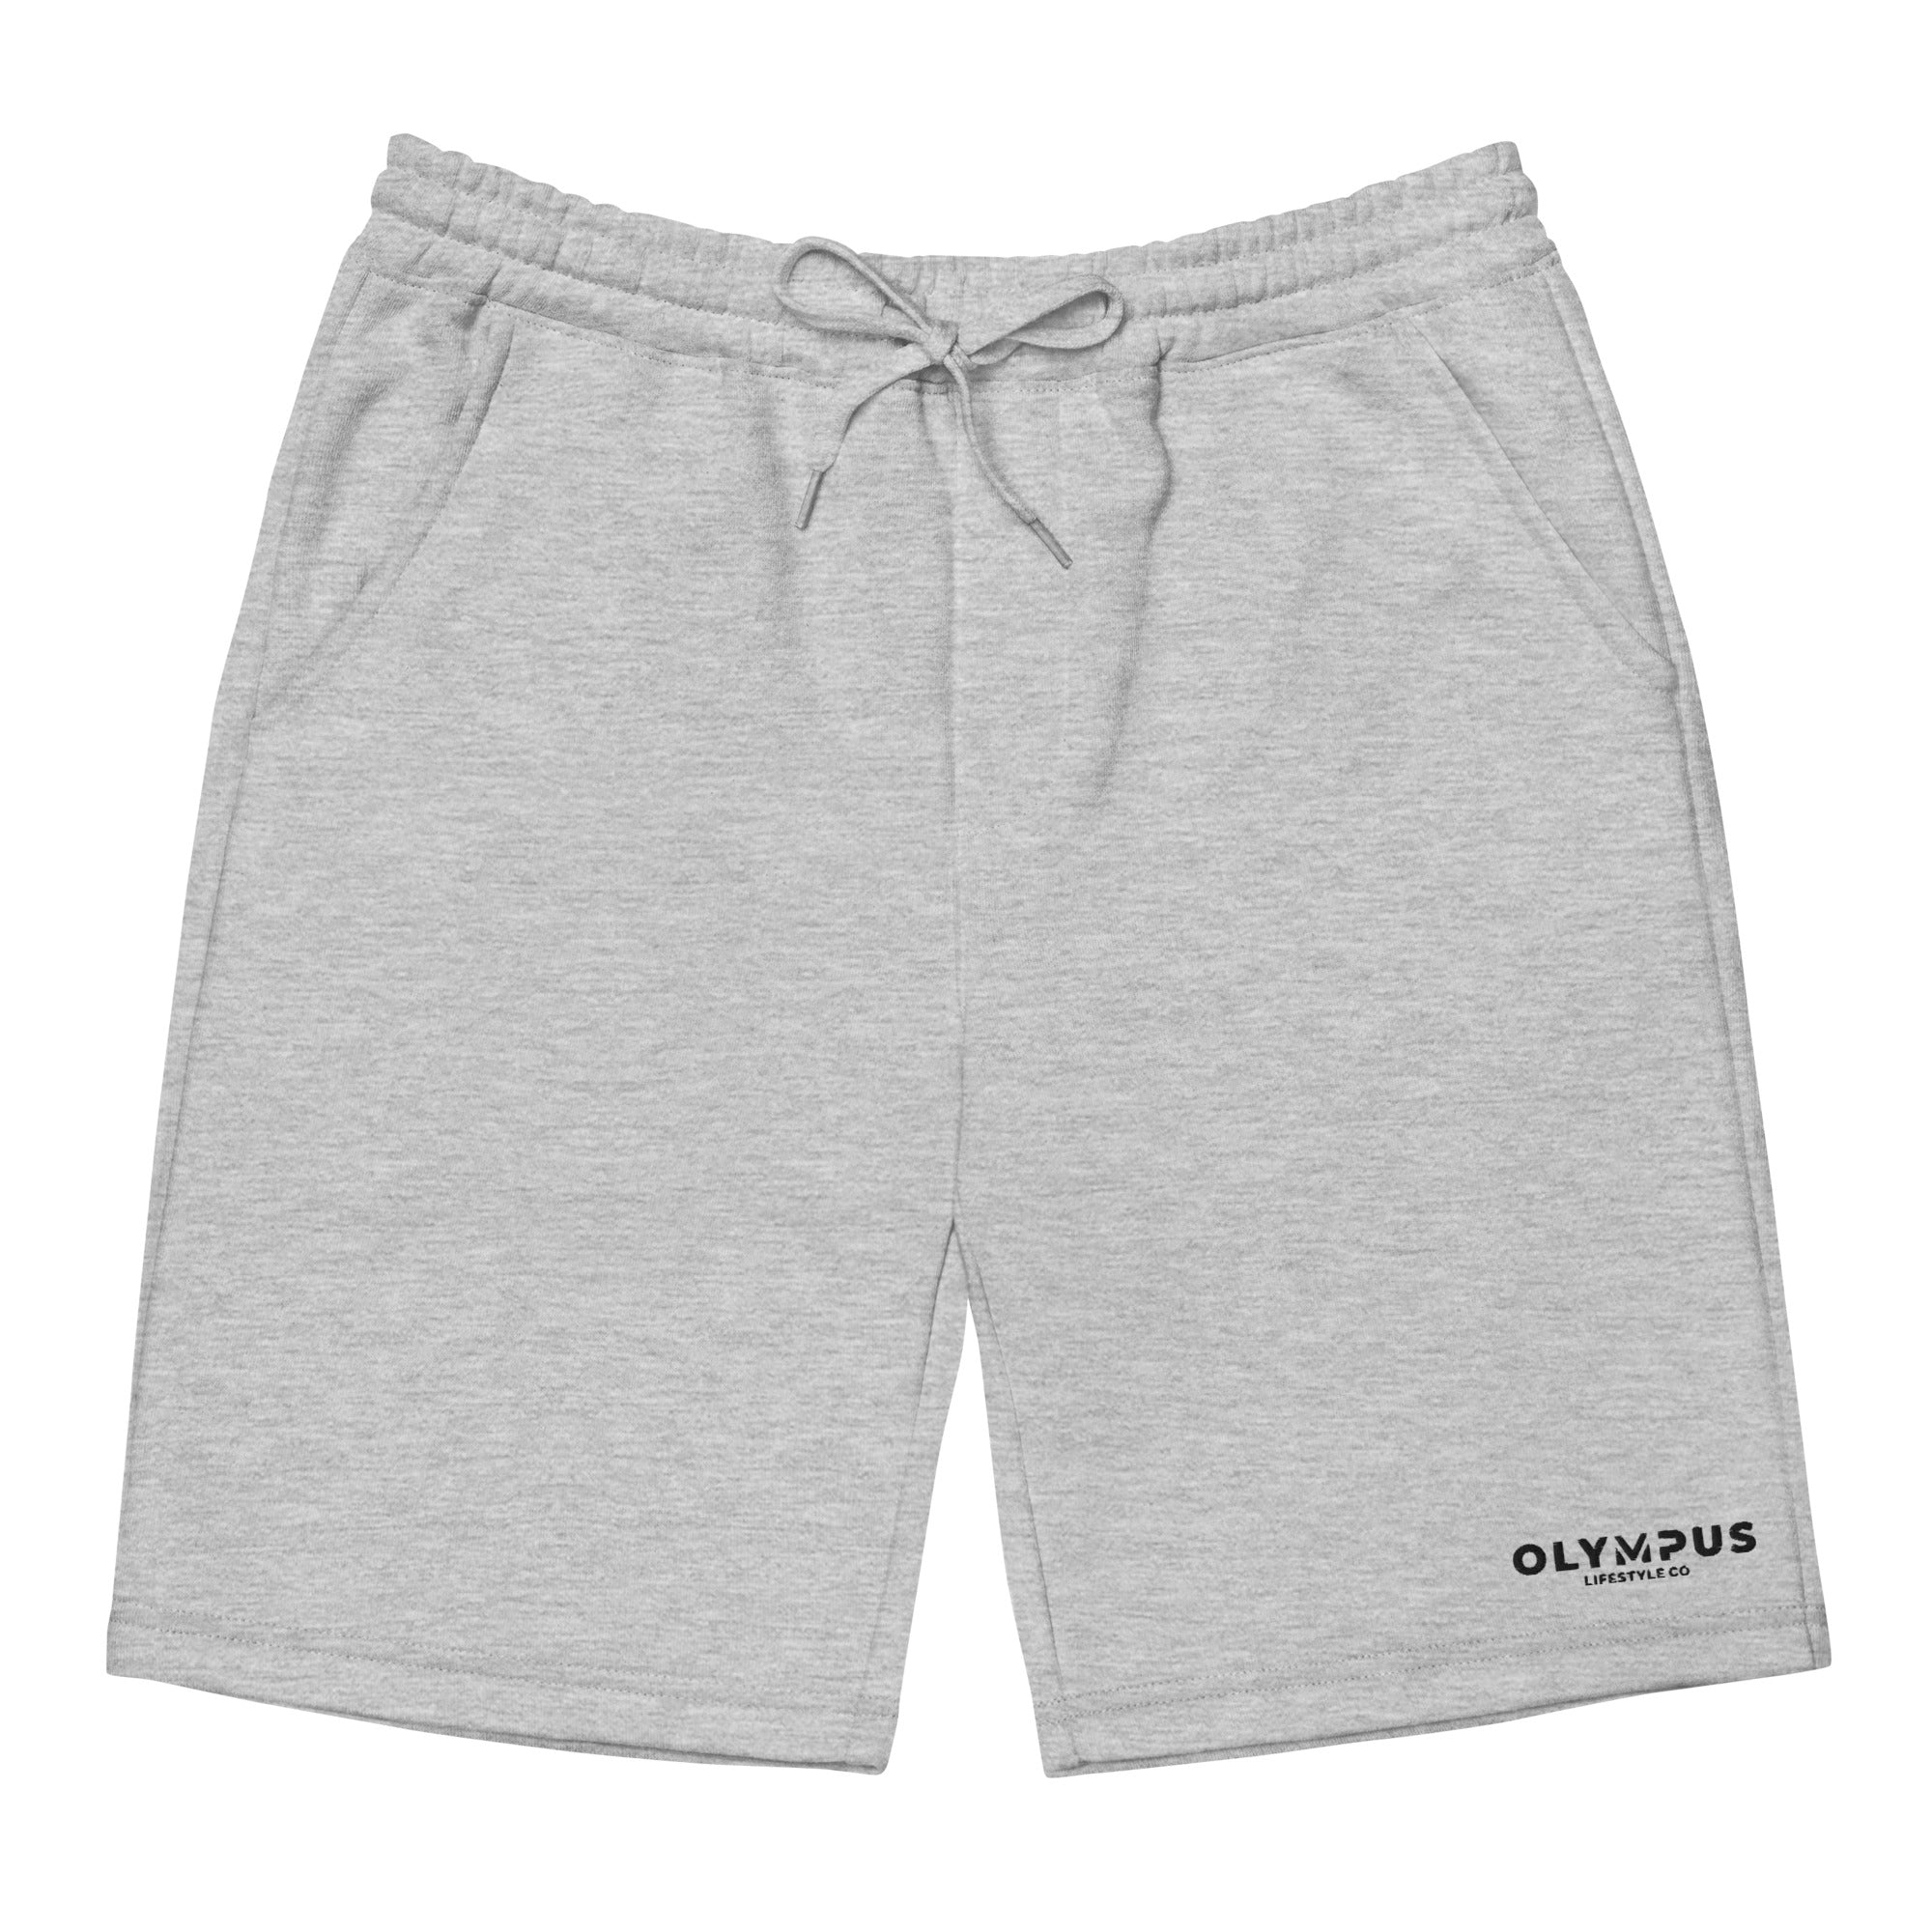 Olympus Men's Grey Fleece Shorts Black Text Logo